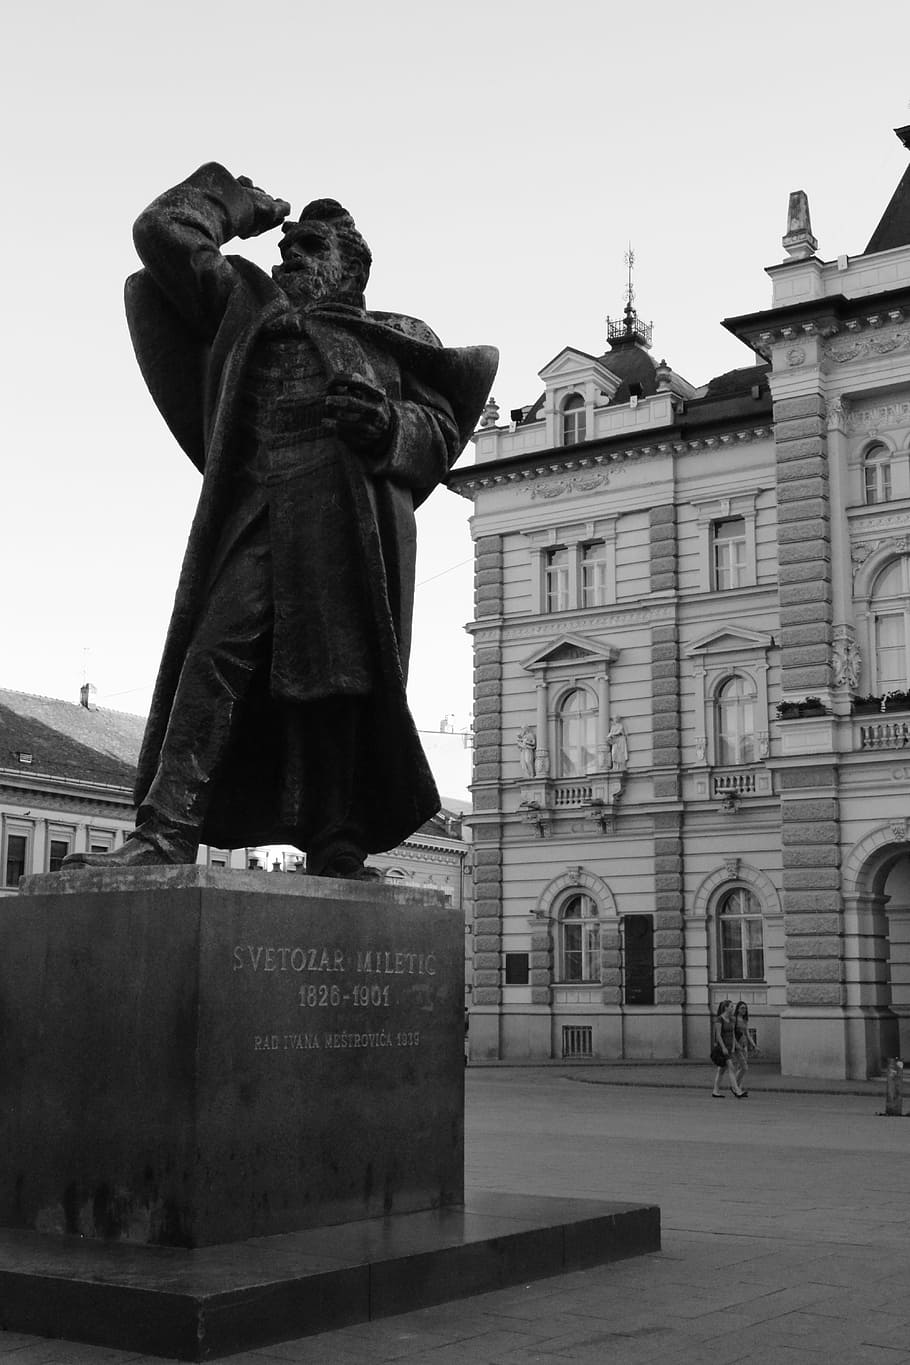 Novi Sad, Serbia, Statue, City Hall, monument, travel destinations, sculpture, architecture, history, art and craft